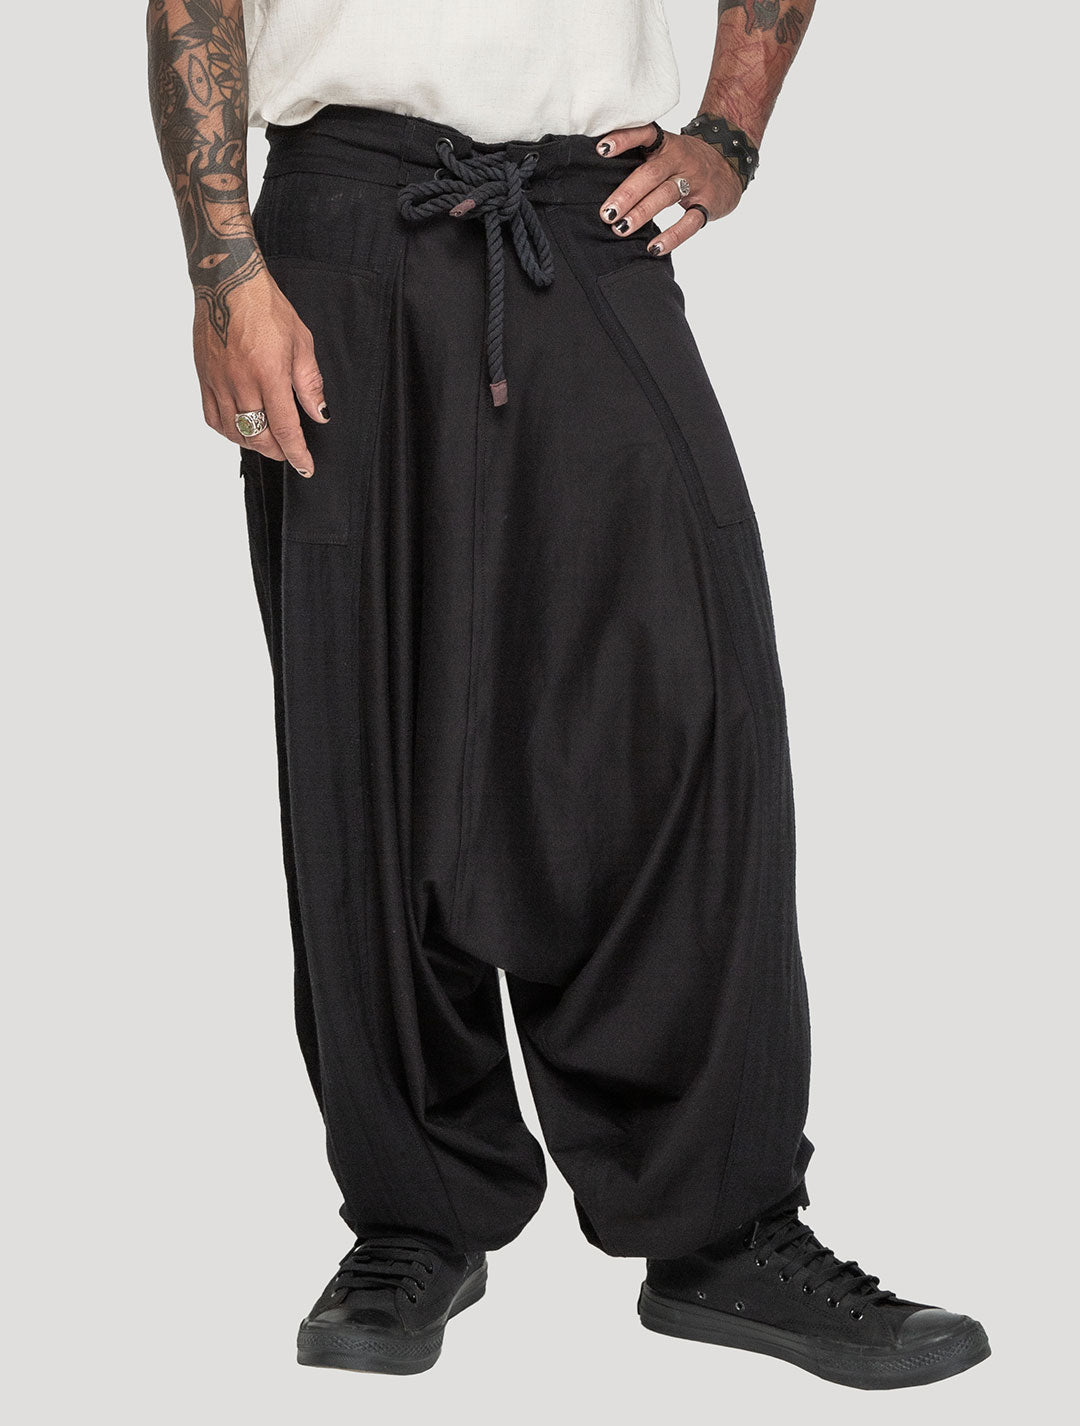 Black 'Shaolin' Linen Pants - Psylo Fashion